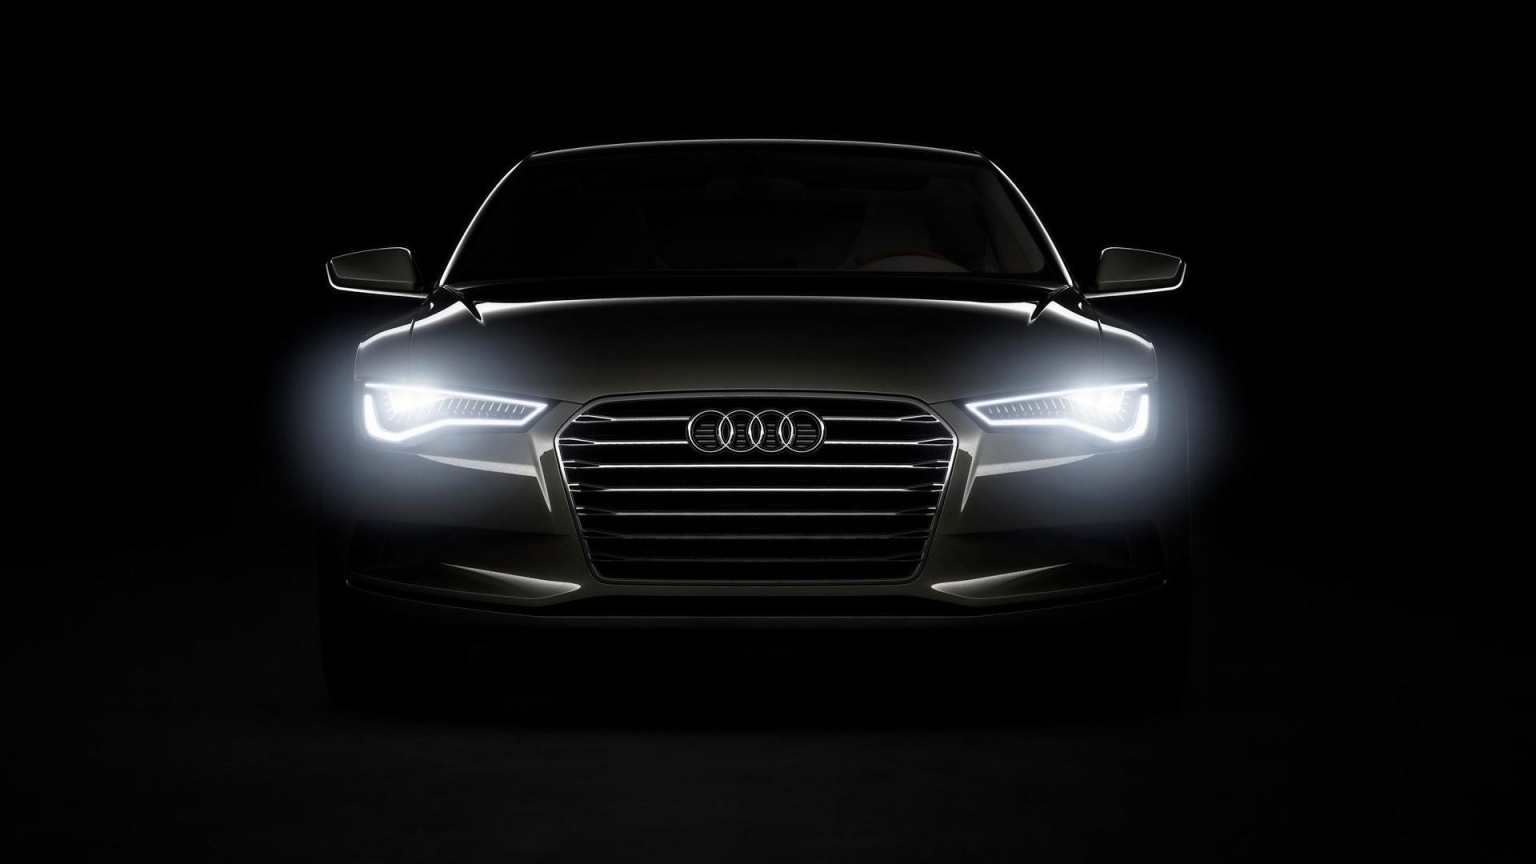 Audi A7 Headlights for 1536 x 864 HDTV resolution